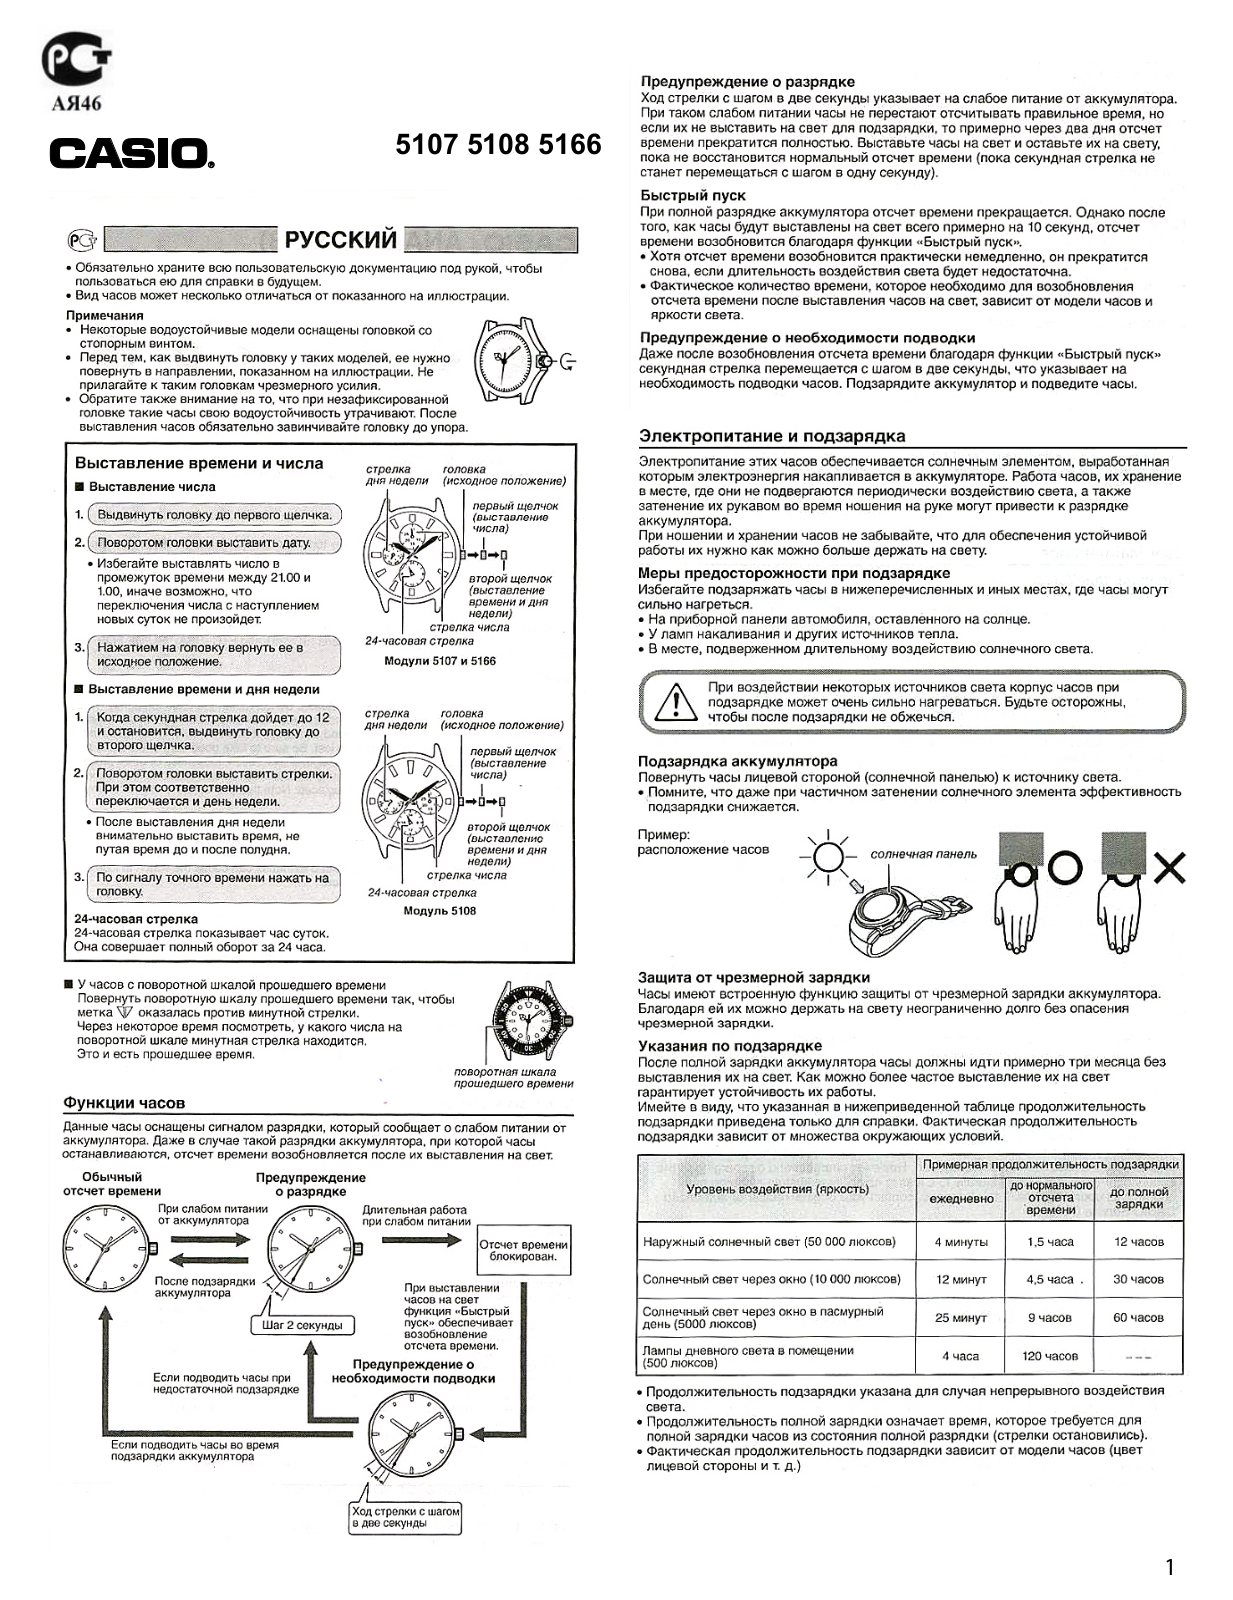 Casio EF-340SB-1A1 User Manual